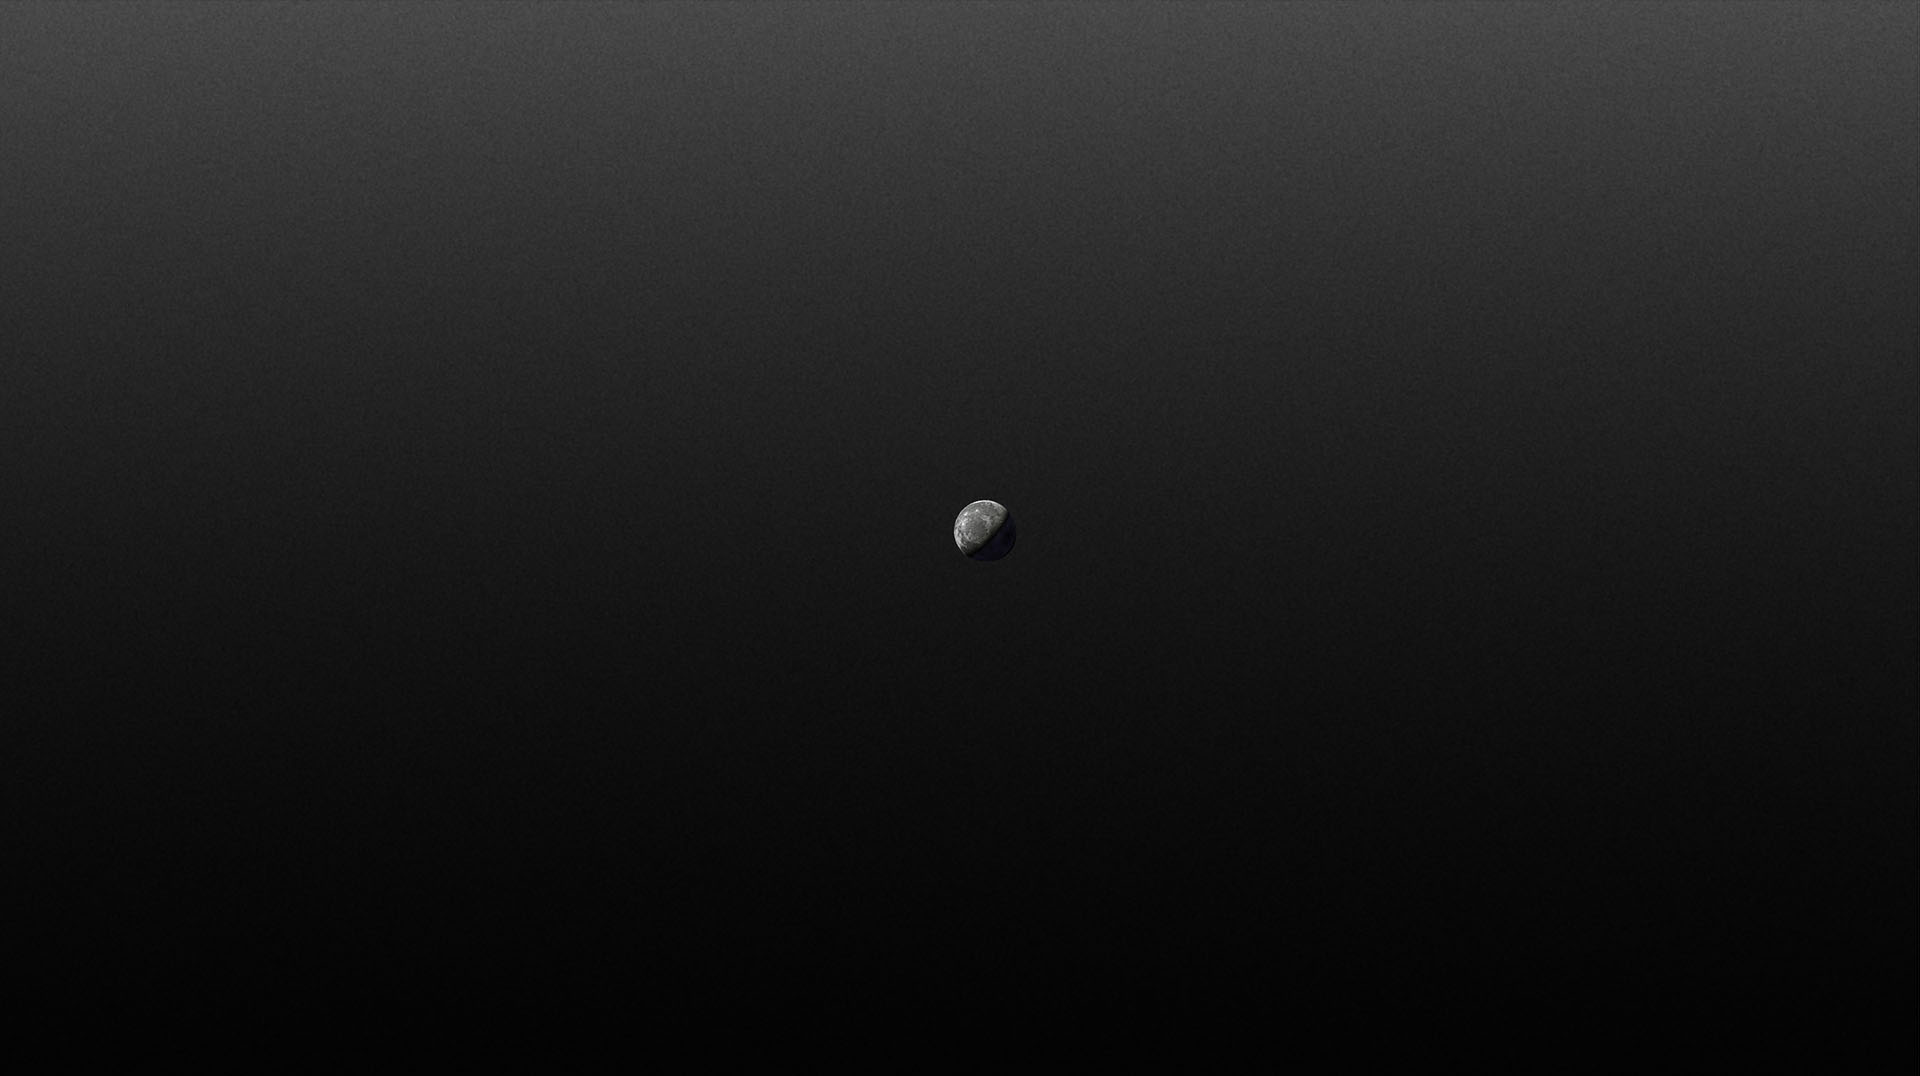 Earth Moon System — Mishka Henner